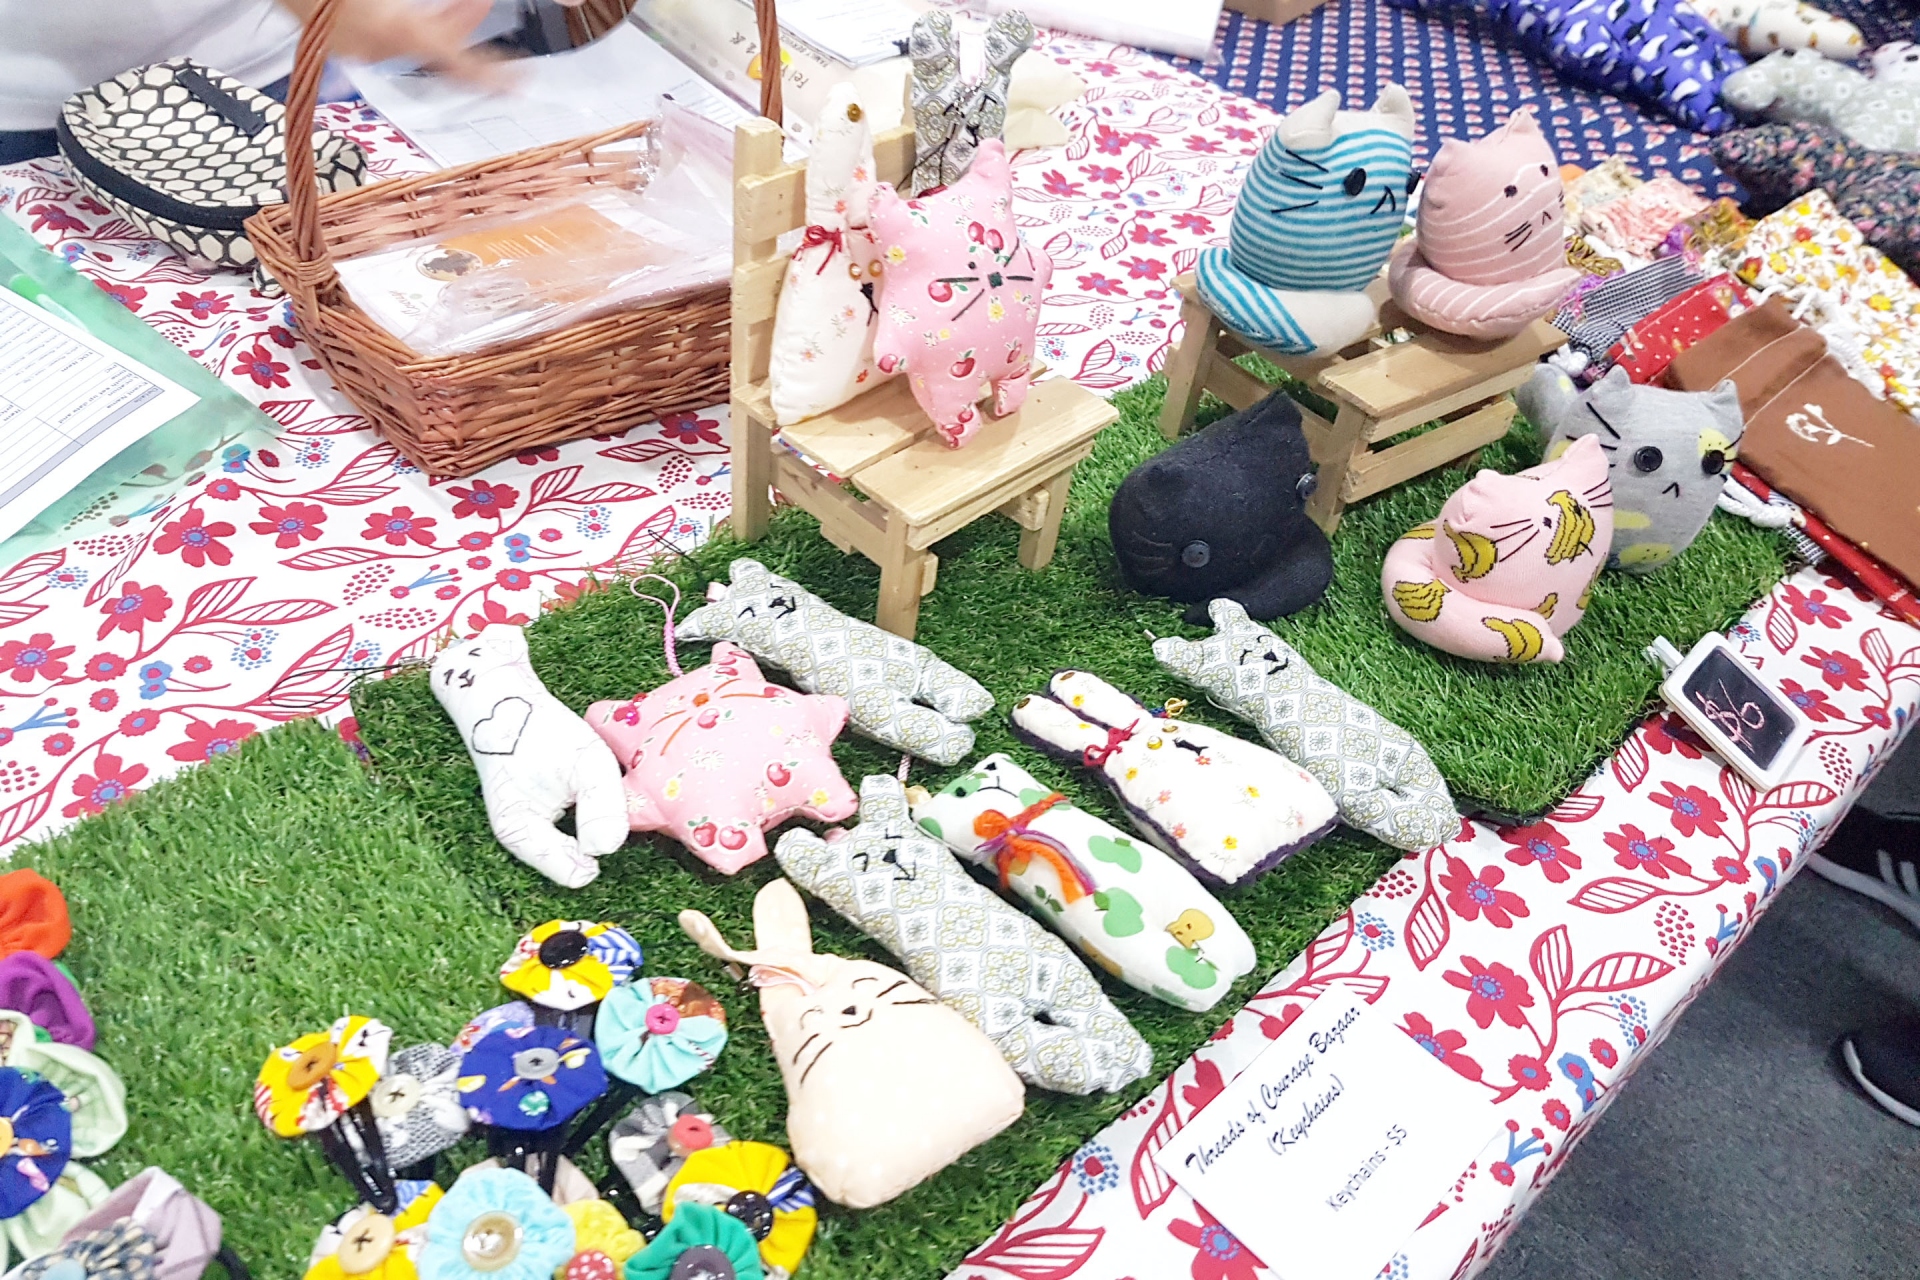 Image of the handmade stuffed animals on the kiosk table.